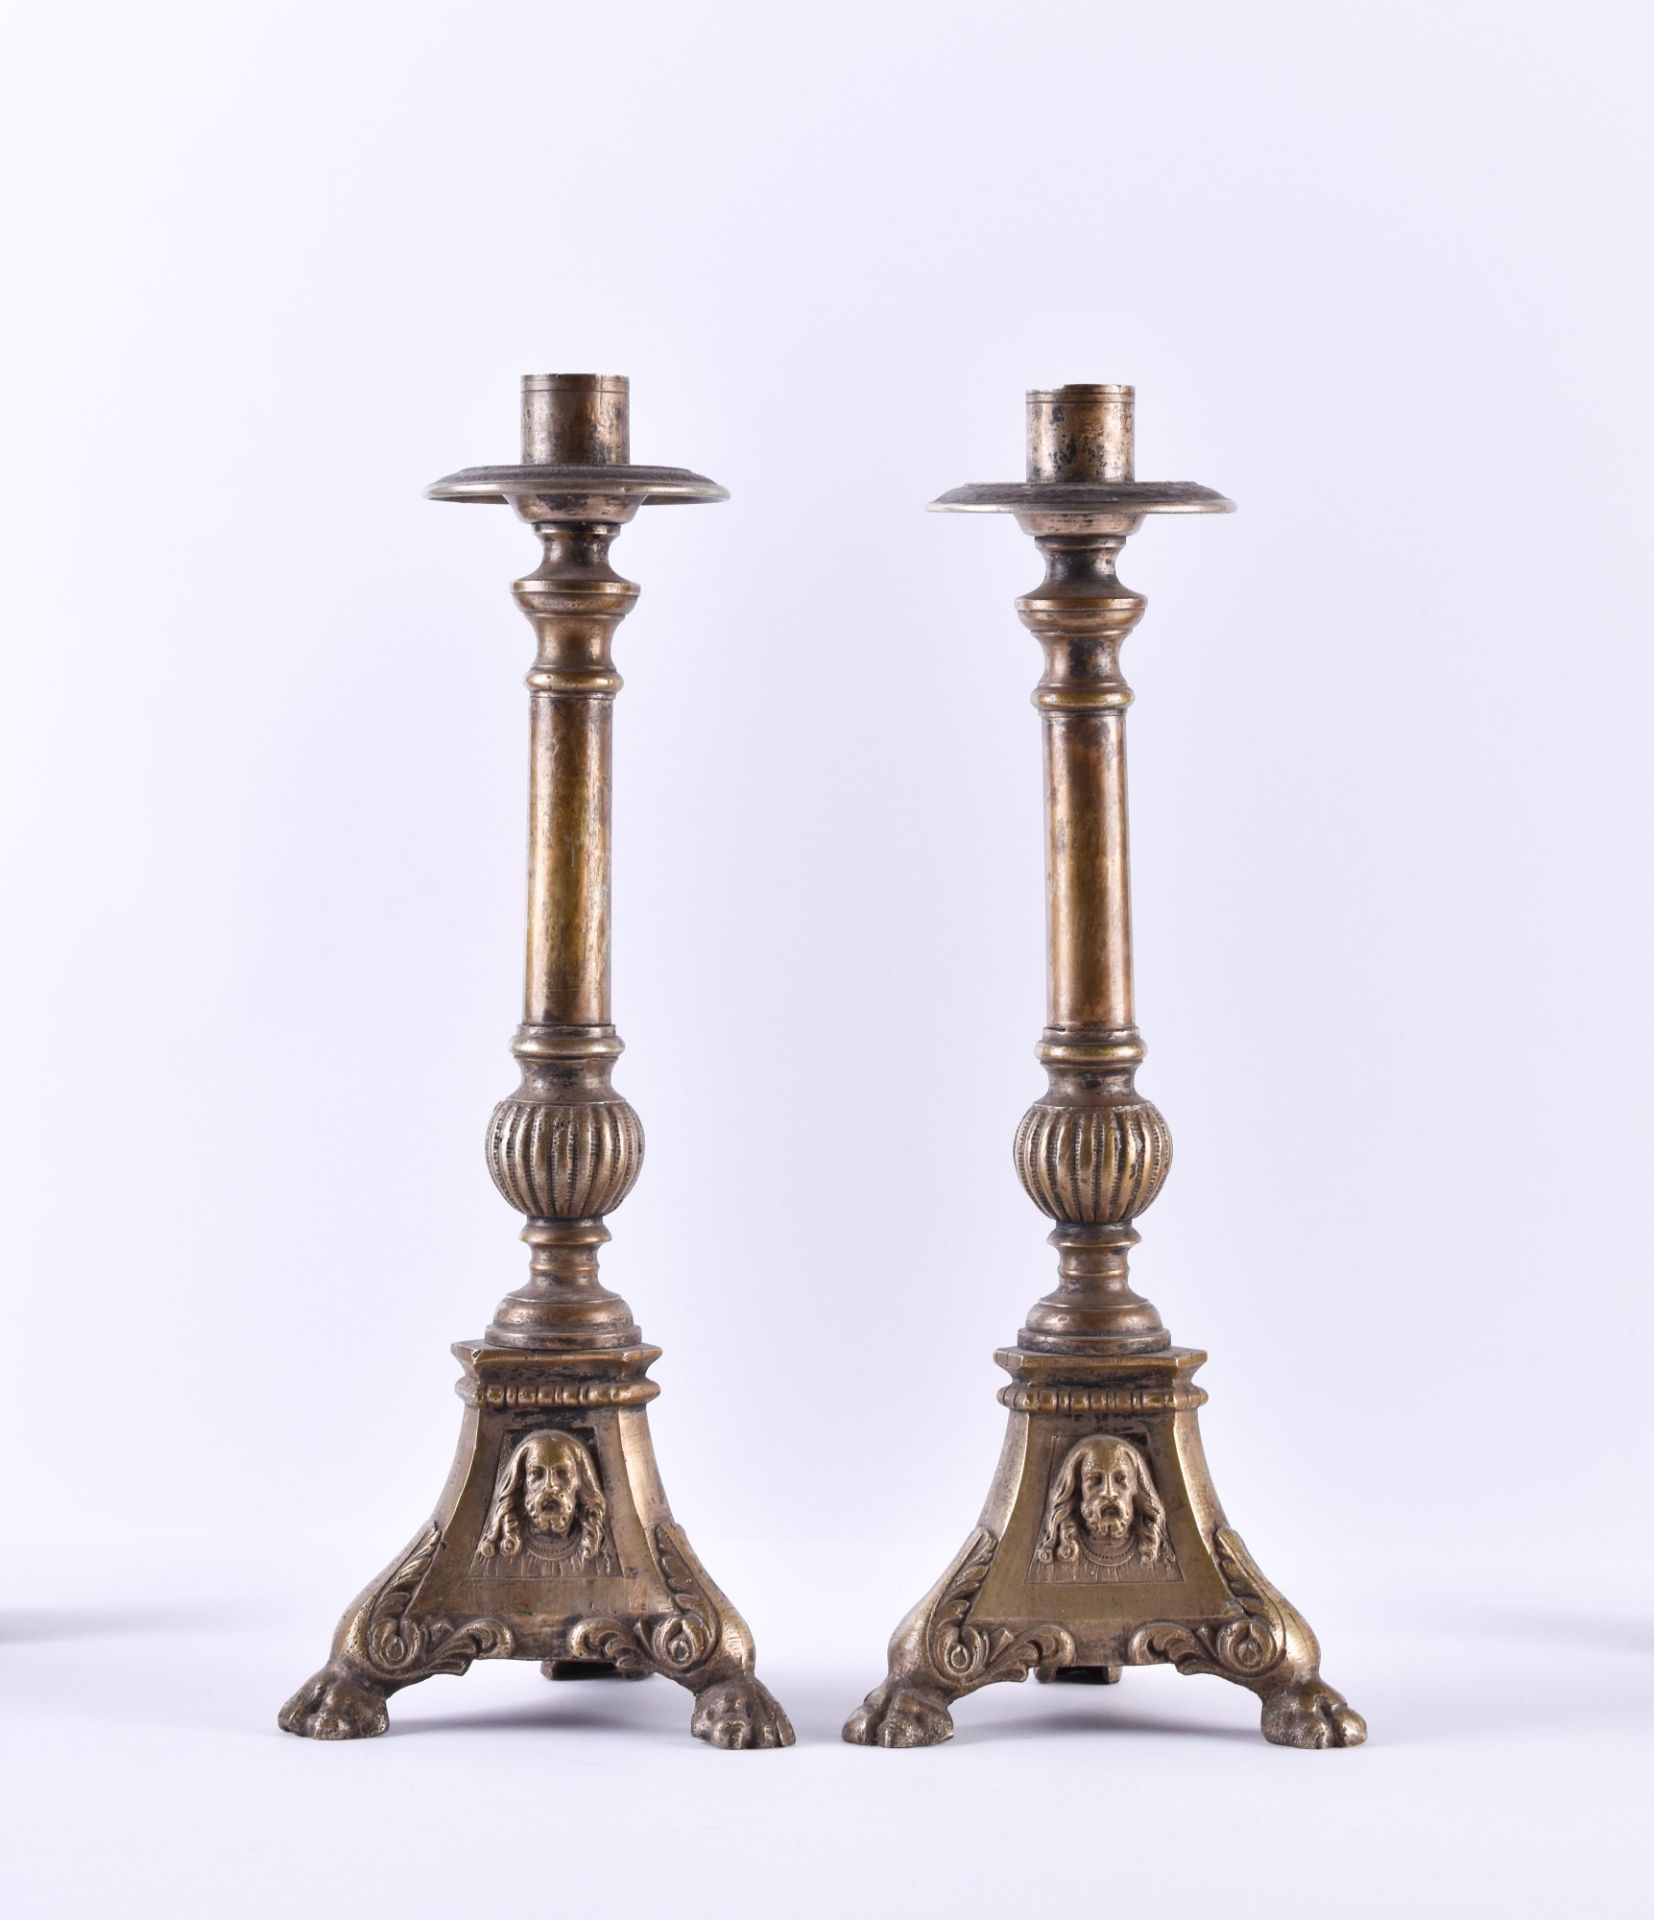 Pair of 19th century altar candlesticks